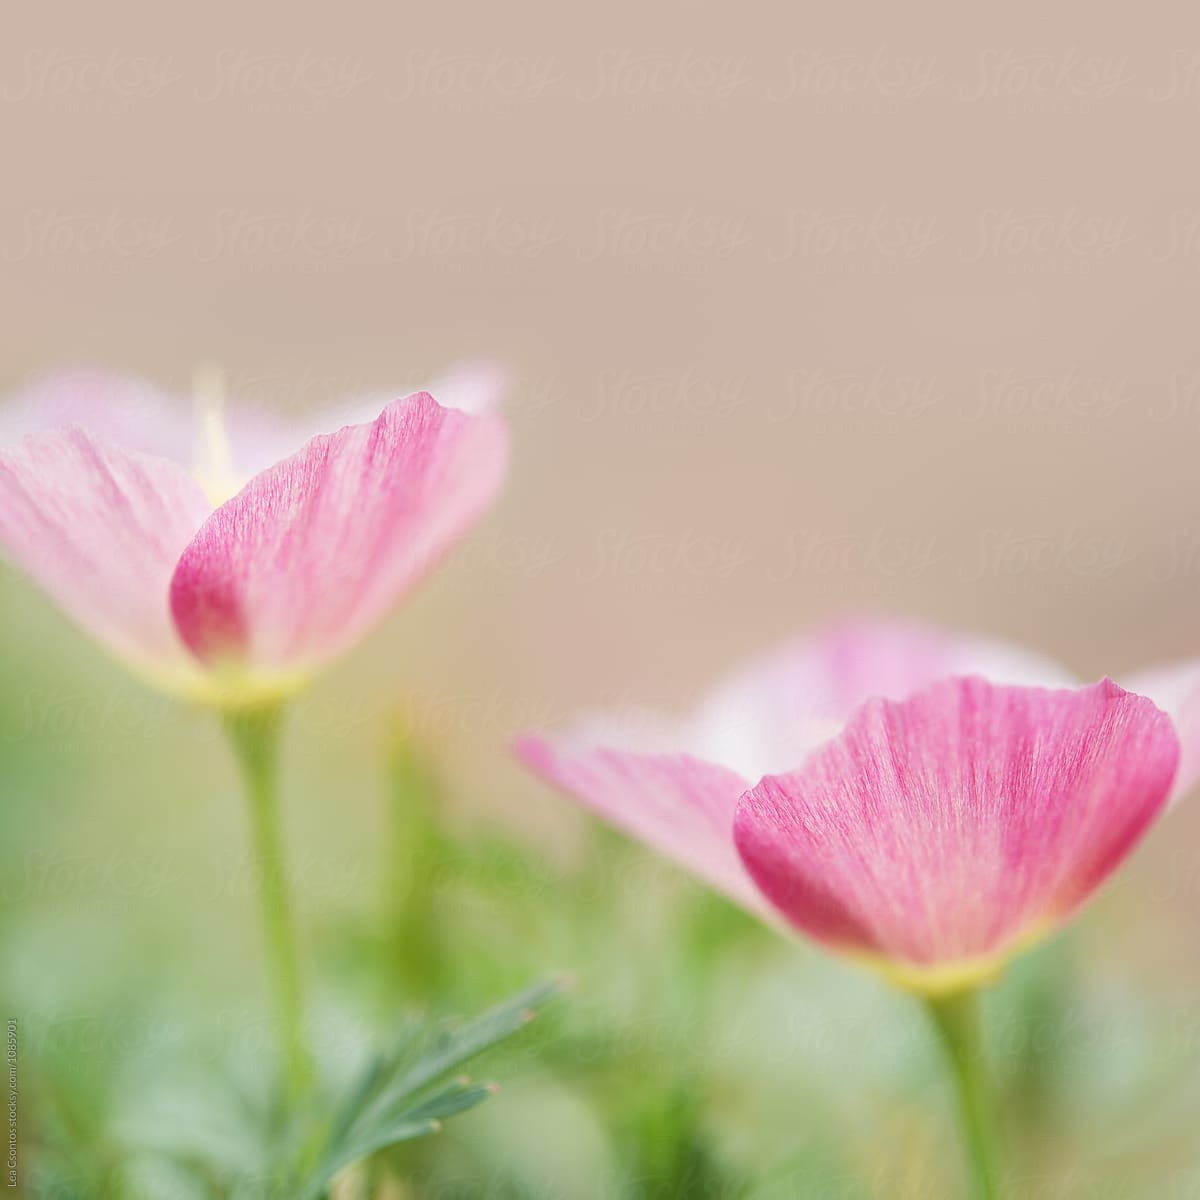 Closeup shot of two light pink flowers